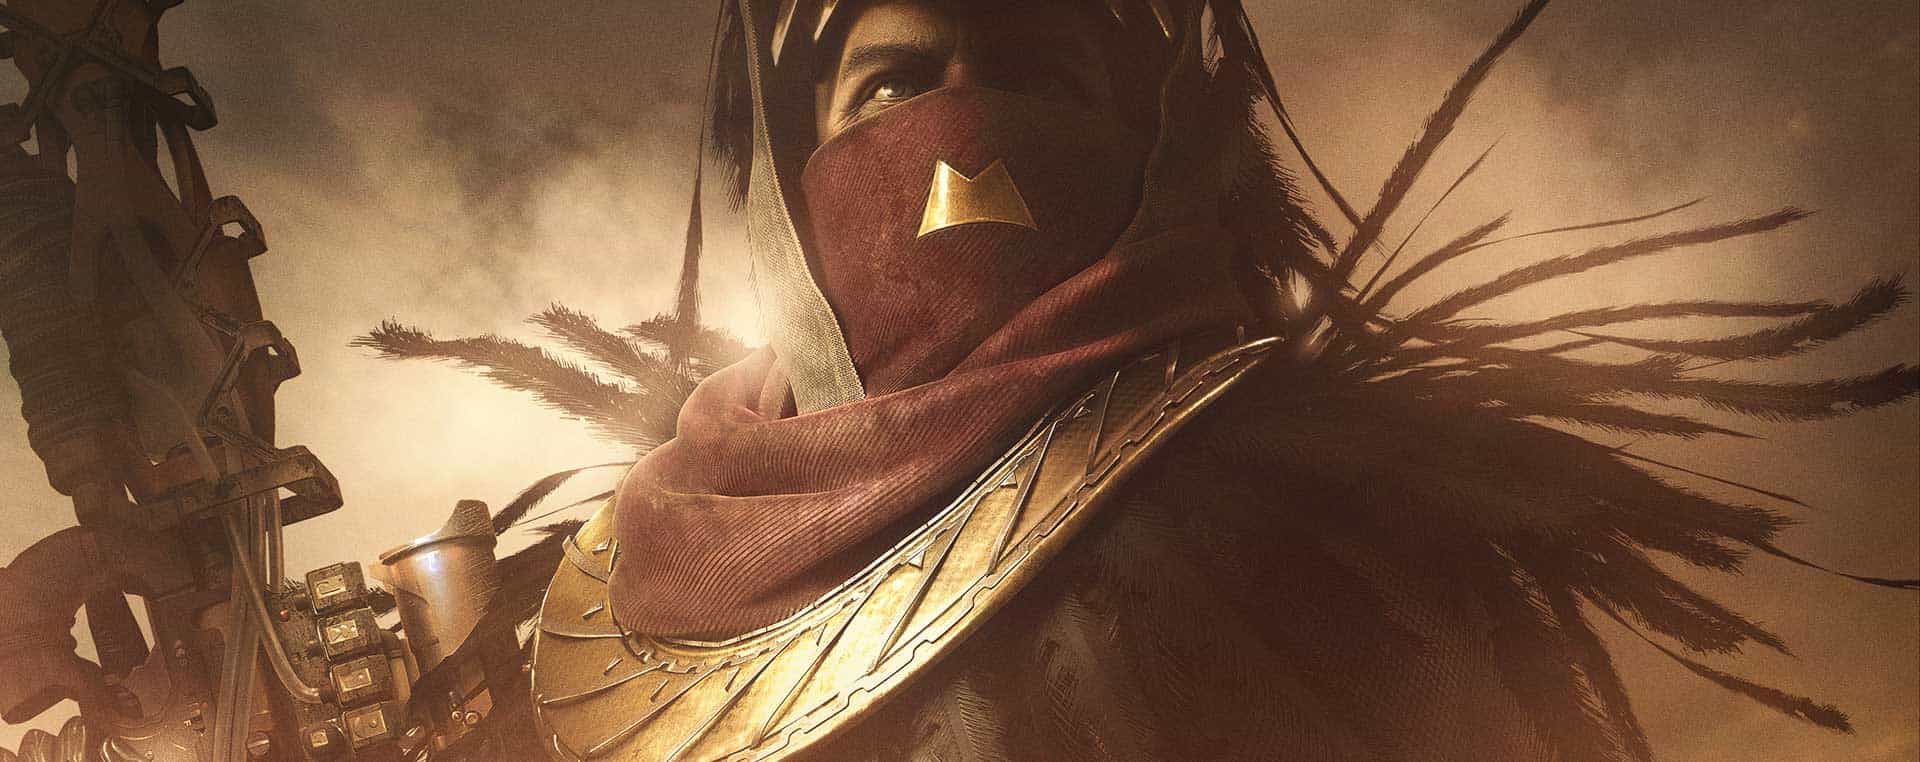 Curse of Osiris kao prvi Destiny 2 DLC ima nezahvalan posao